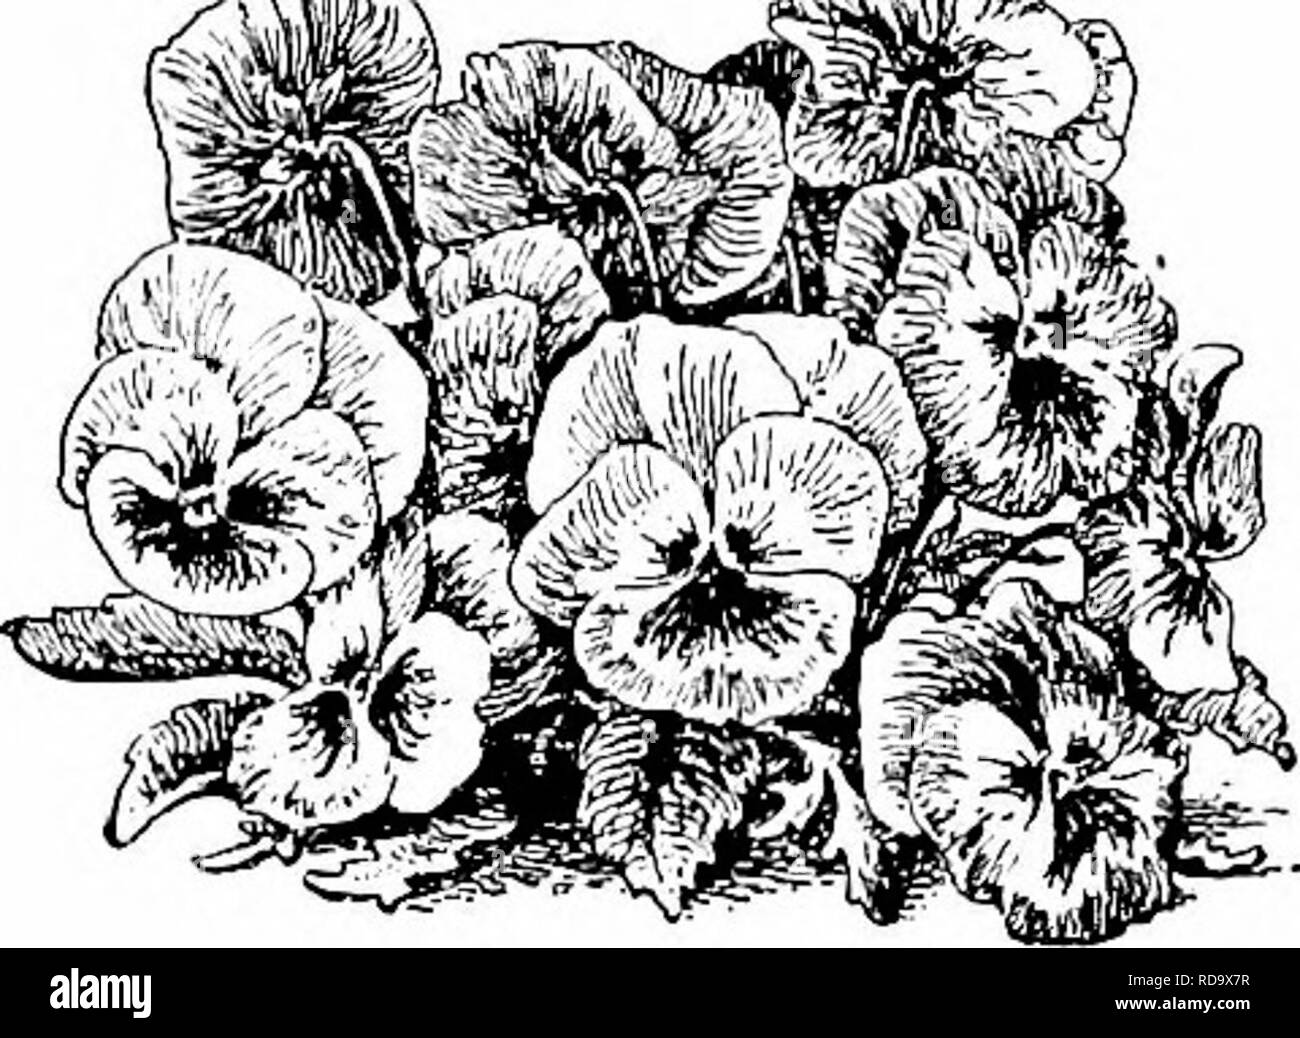 . Manual of gardening; a practical guide to the making of home grounds and the growing of flowers, fruits, and vegetables for home use. Gardening. ^k.. THE ORNAMENTAL PLANTS — ANNUALS 249 Erysimum Perofskianum; Arkansanum. Eschscholtzias, in several varieties (Fig. 249). Gaillardia pieta. Gilia achilleaefolia; capitata; laciniata; tricolor. Iberis affinis. Lavatera alba. Matthiolas or stocks. (Enothera rosea; Lamarckiana; Phlox Drummondii. [Drummondii. Podolepis affinis; chrysantha. Salvia coccinea; farinacea; Horminum. Verbenas. Vicia Gerardi. Virginian stocks. 244. Pansies. Viscaria elegans; Stock Photo